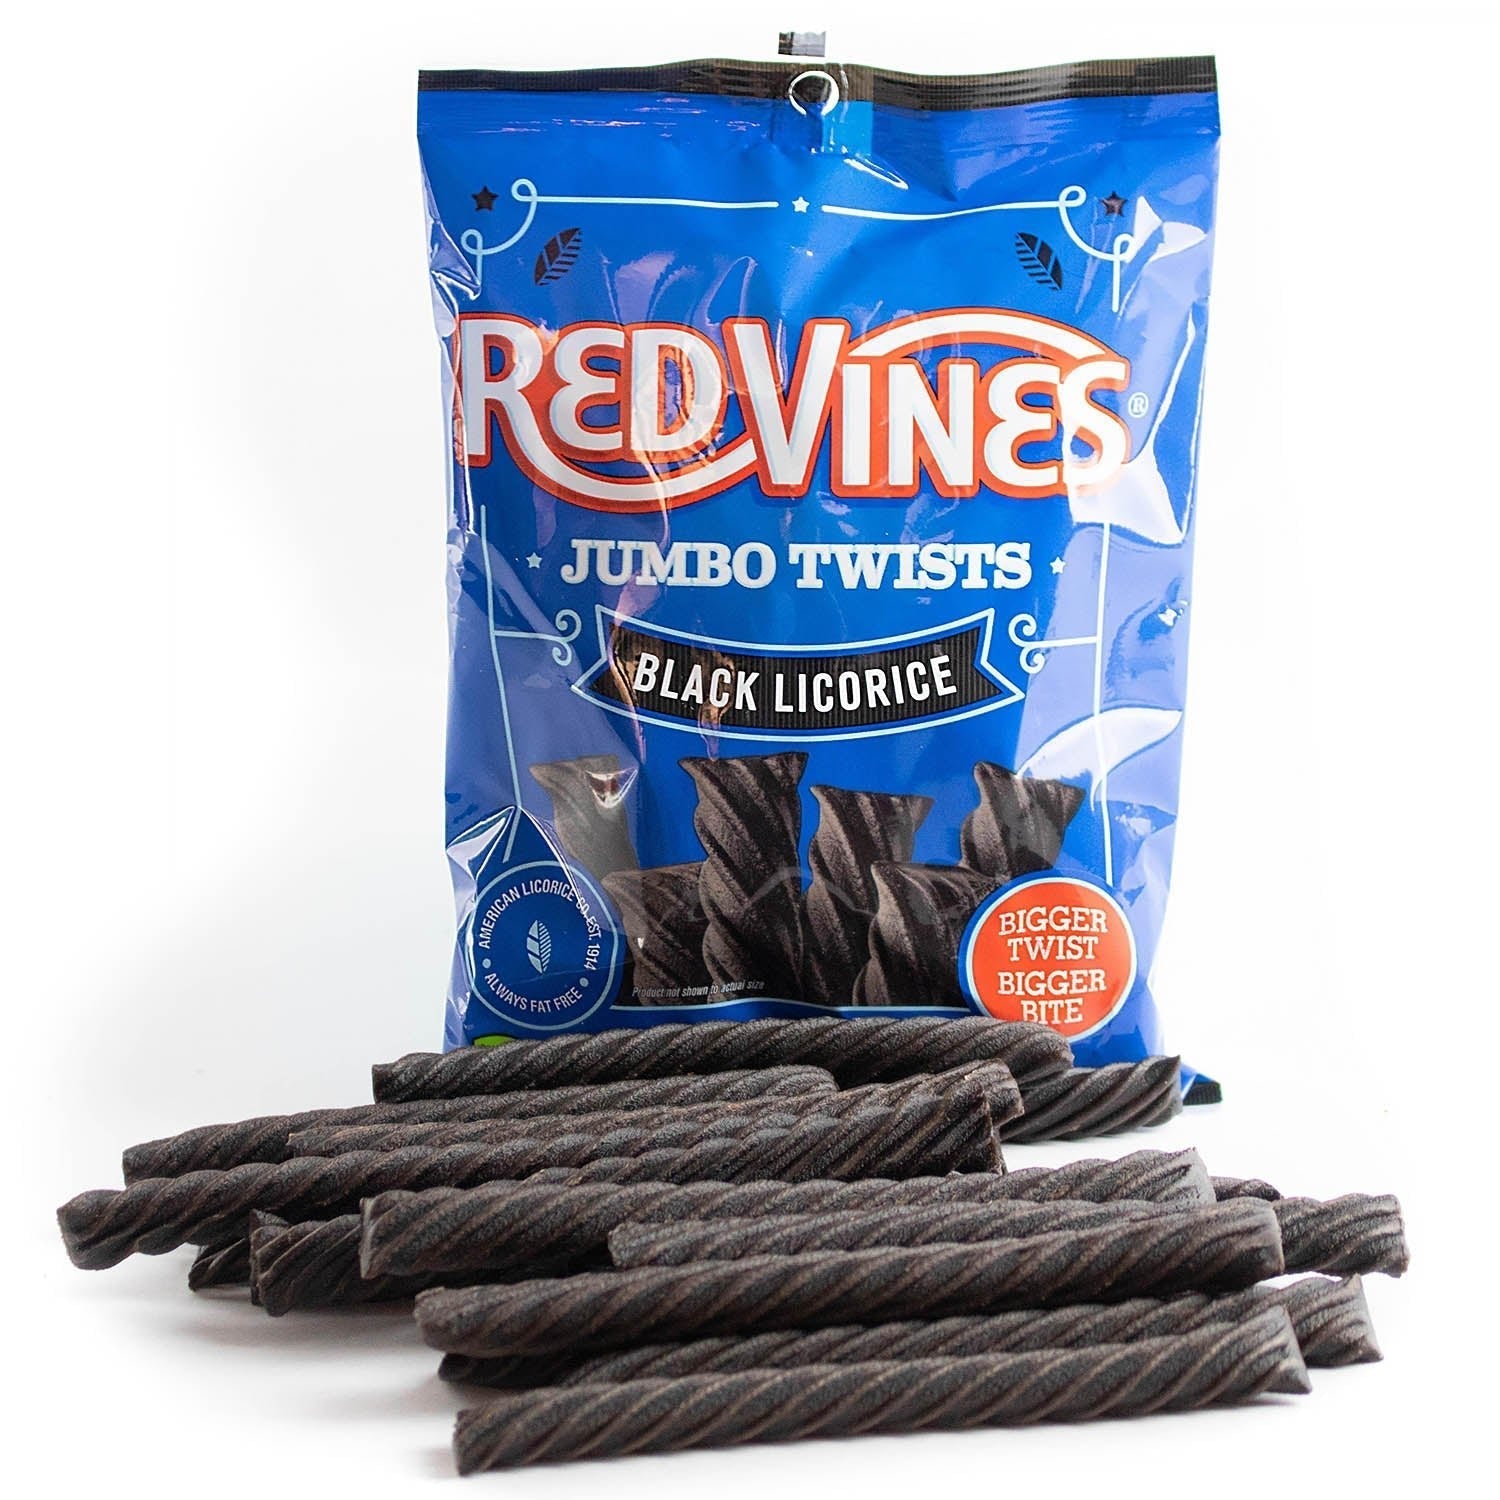 Red Vines Jumbo Black Licorice Twists 8oz Hanging Bag